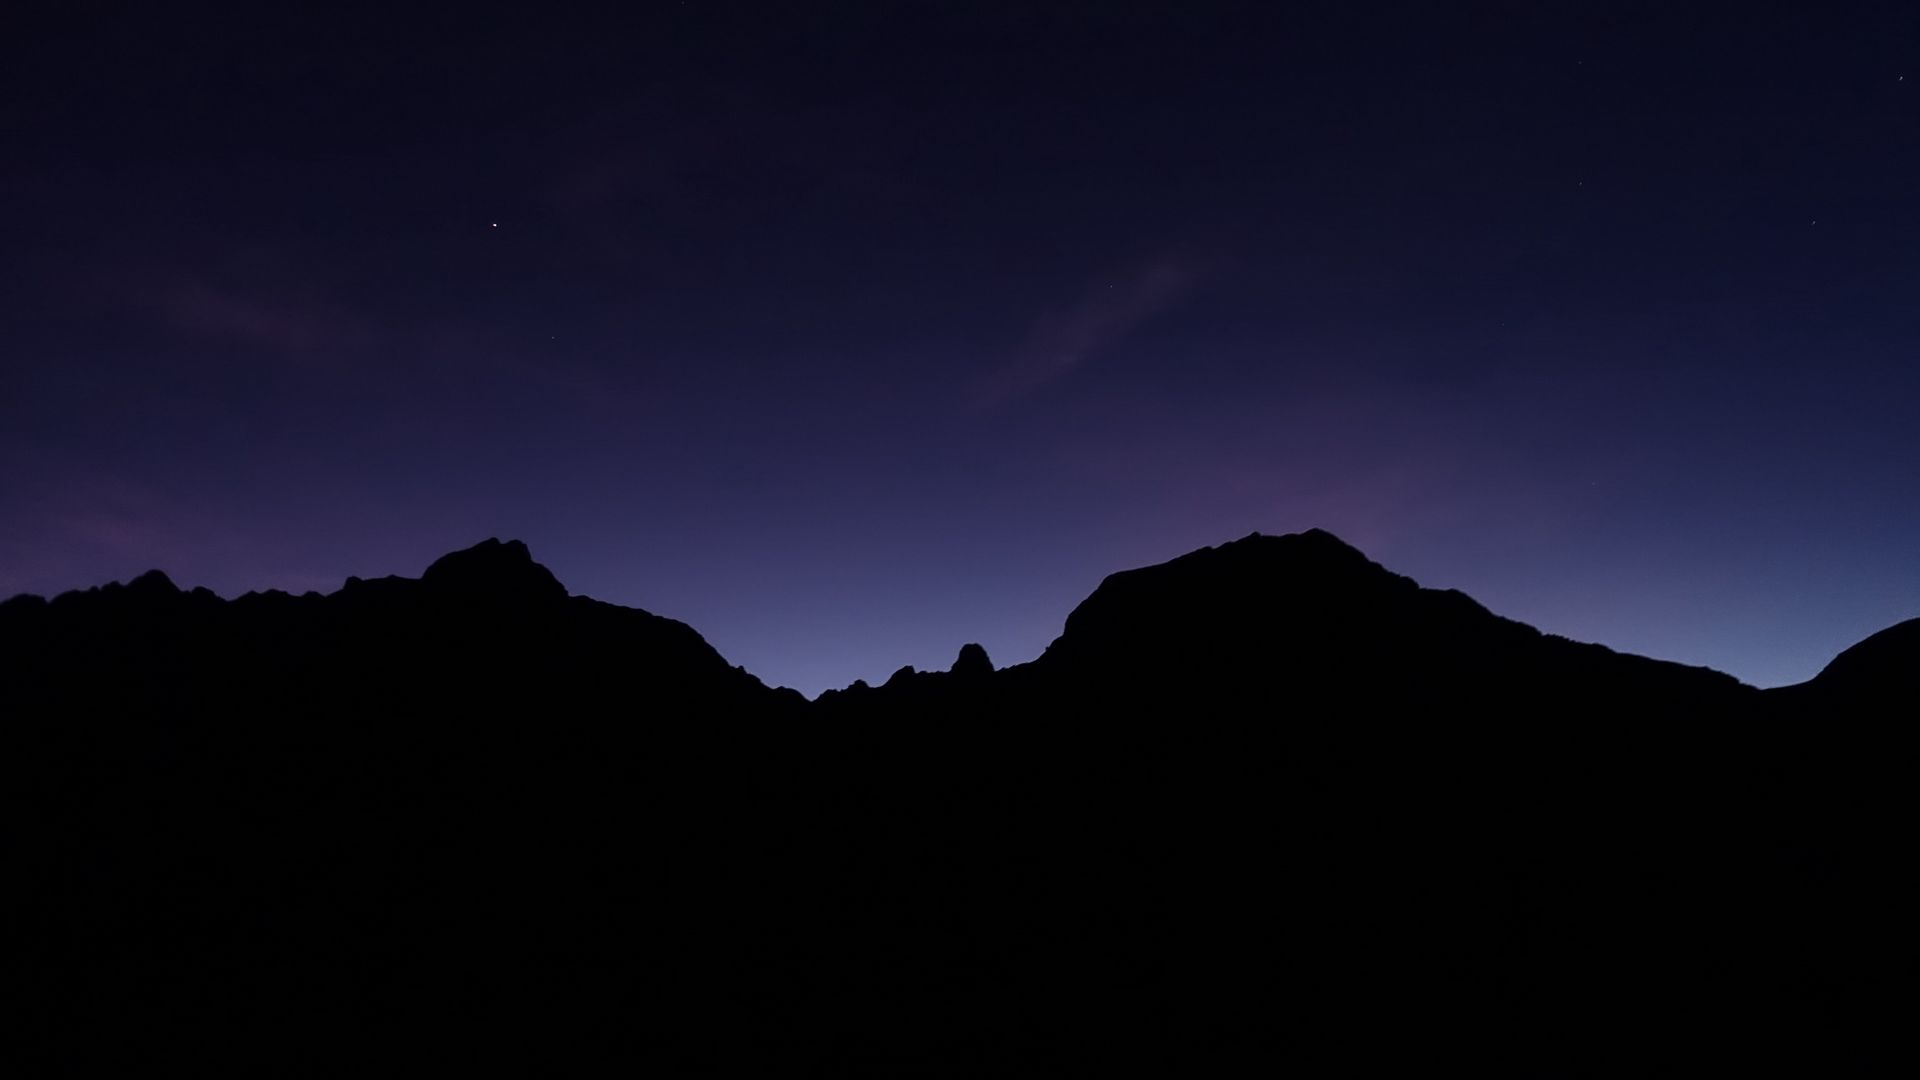 Download wallpaper 1920x1080 mountains, night, dark, nature full hd, hdtv,  fhd, 1080p hd background